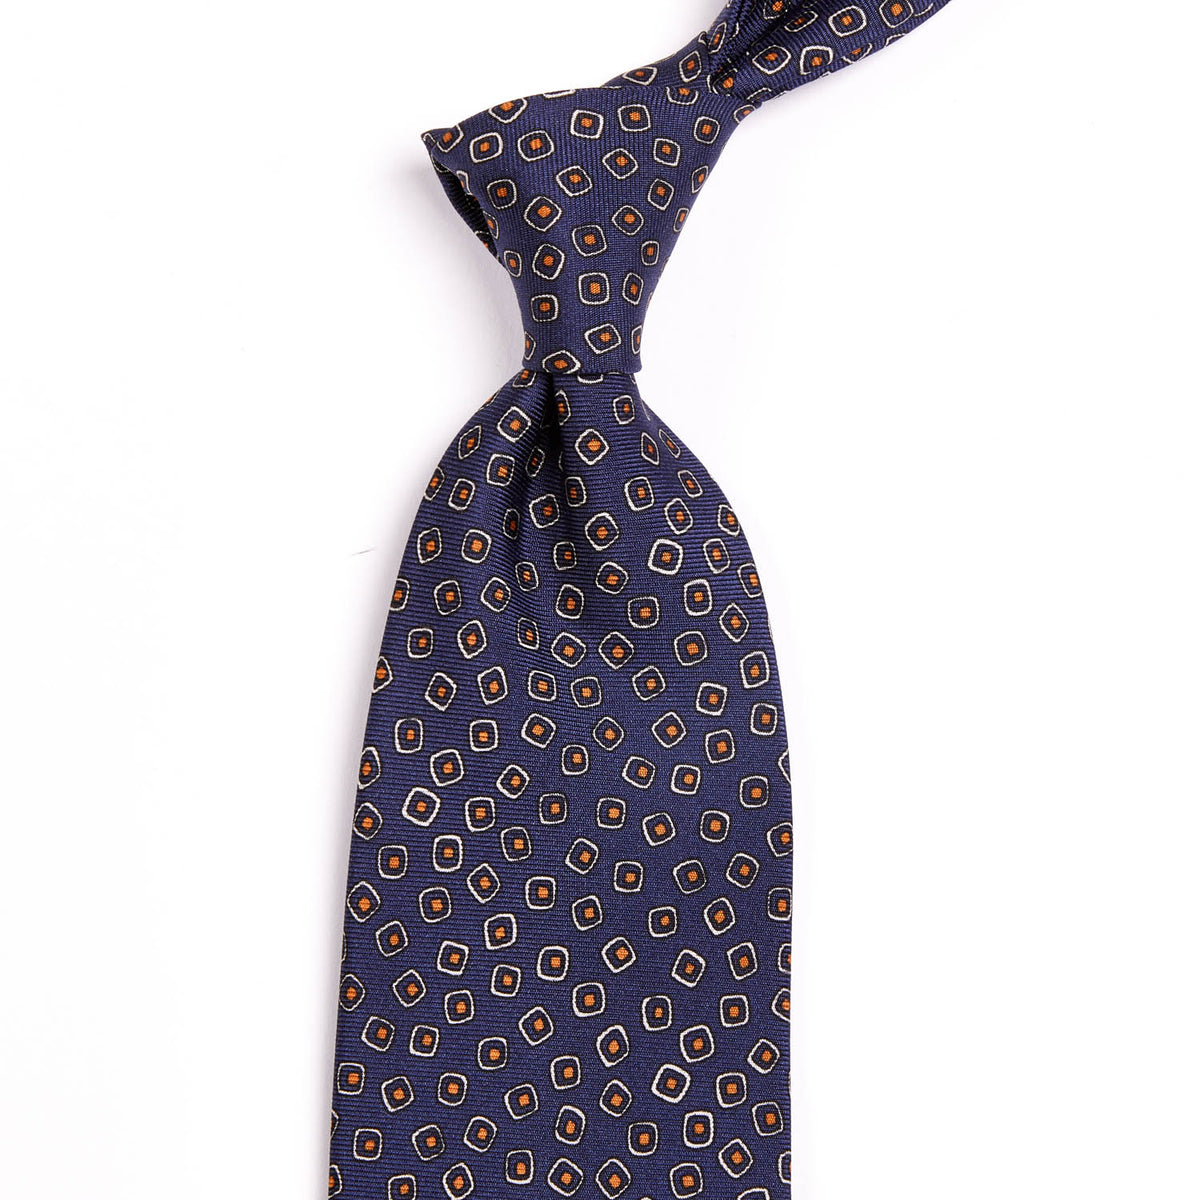 Sovereign Grade Navy/White Eton Printed Silk Tie, 150cm